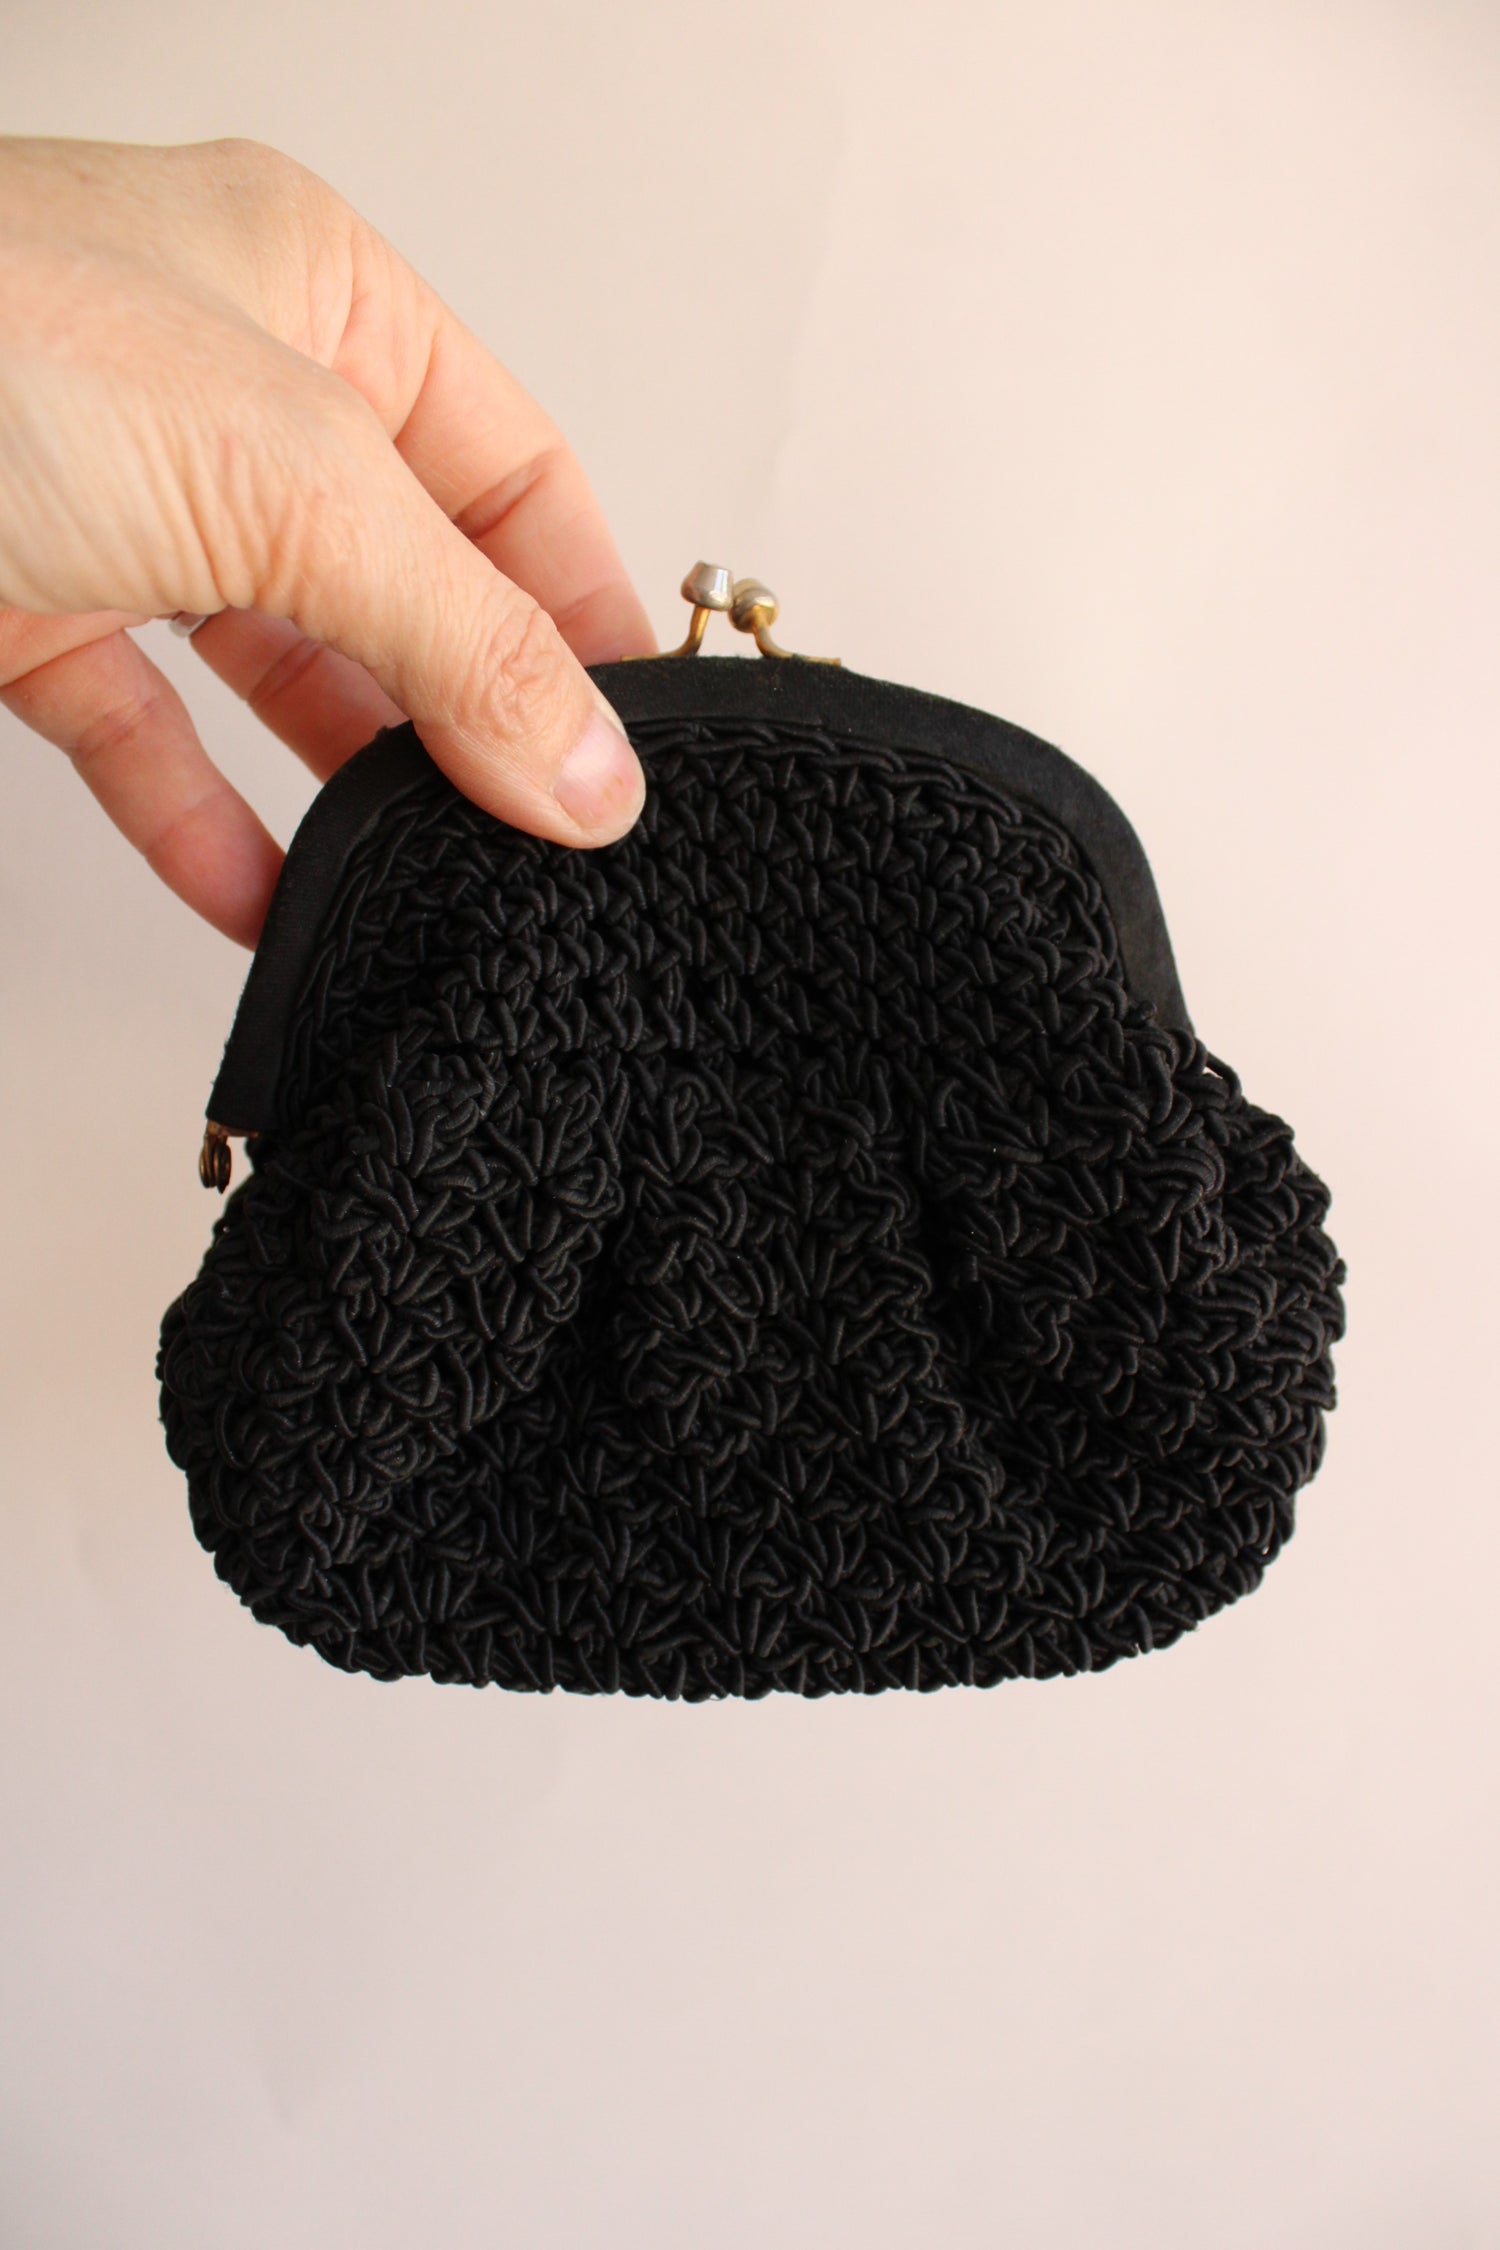 1940s Black Velvet Handbag - Formal Purse - 40's 50's Accessories